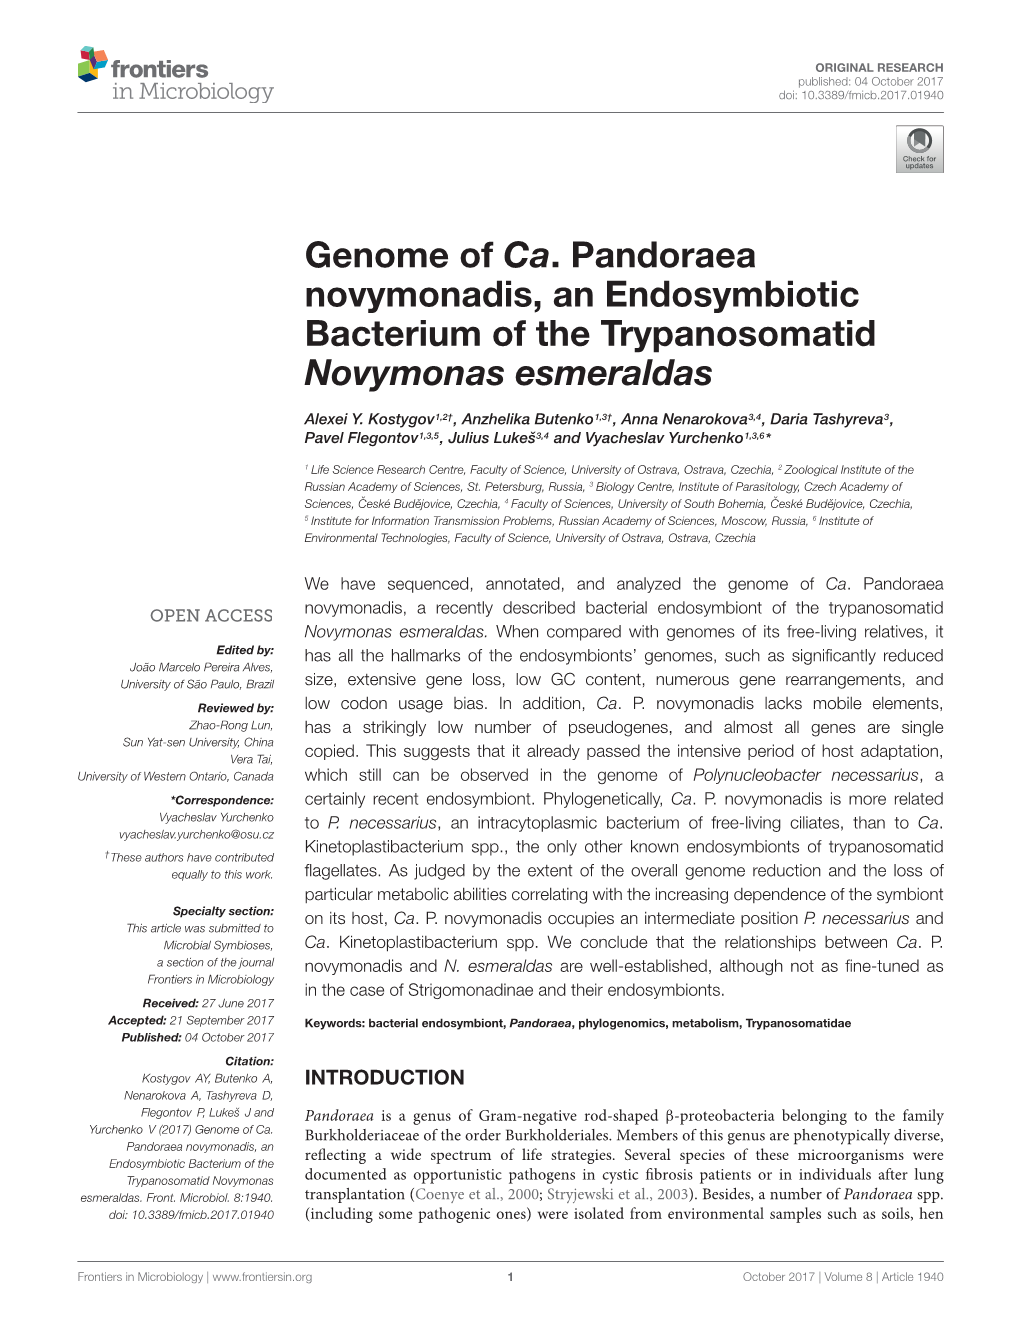 Genome of Ca. Pandoraea Novymonadis, an Endosymbiotic Bacterium of the Trypanosomatid Novymonas Esmeraldas